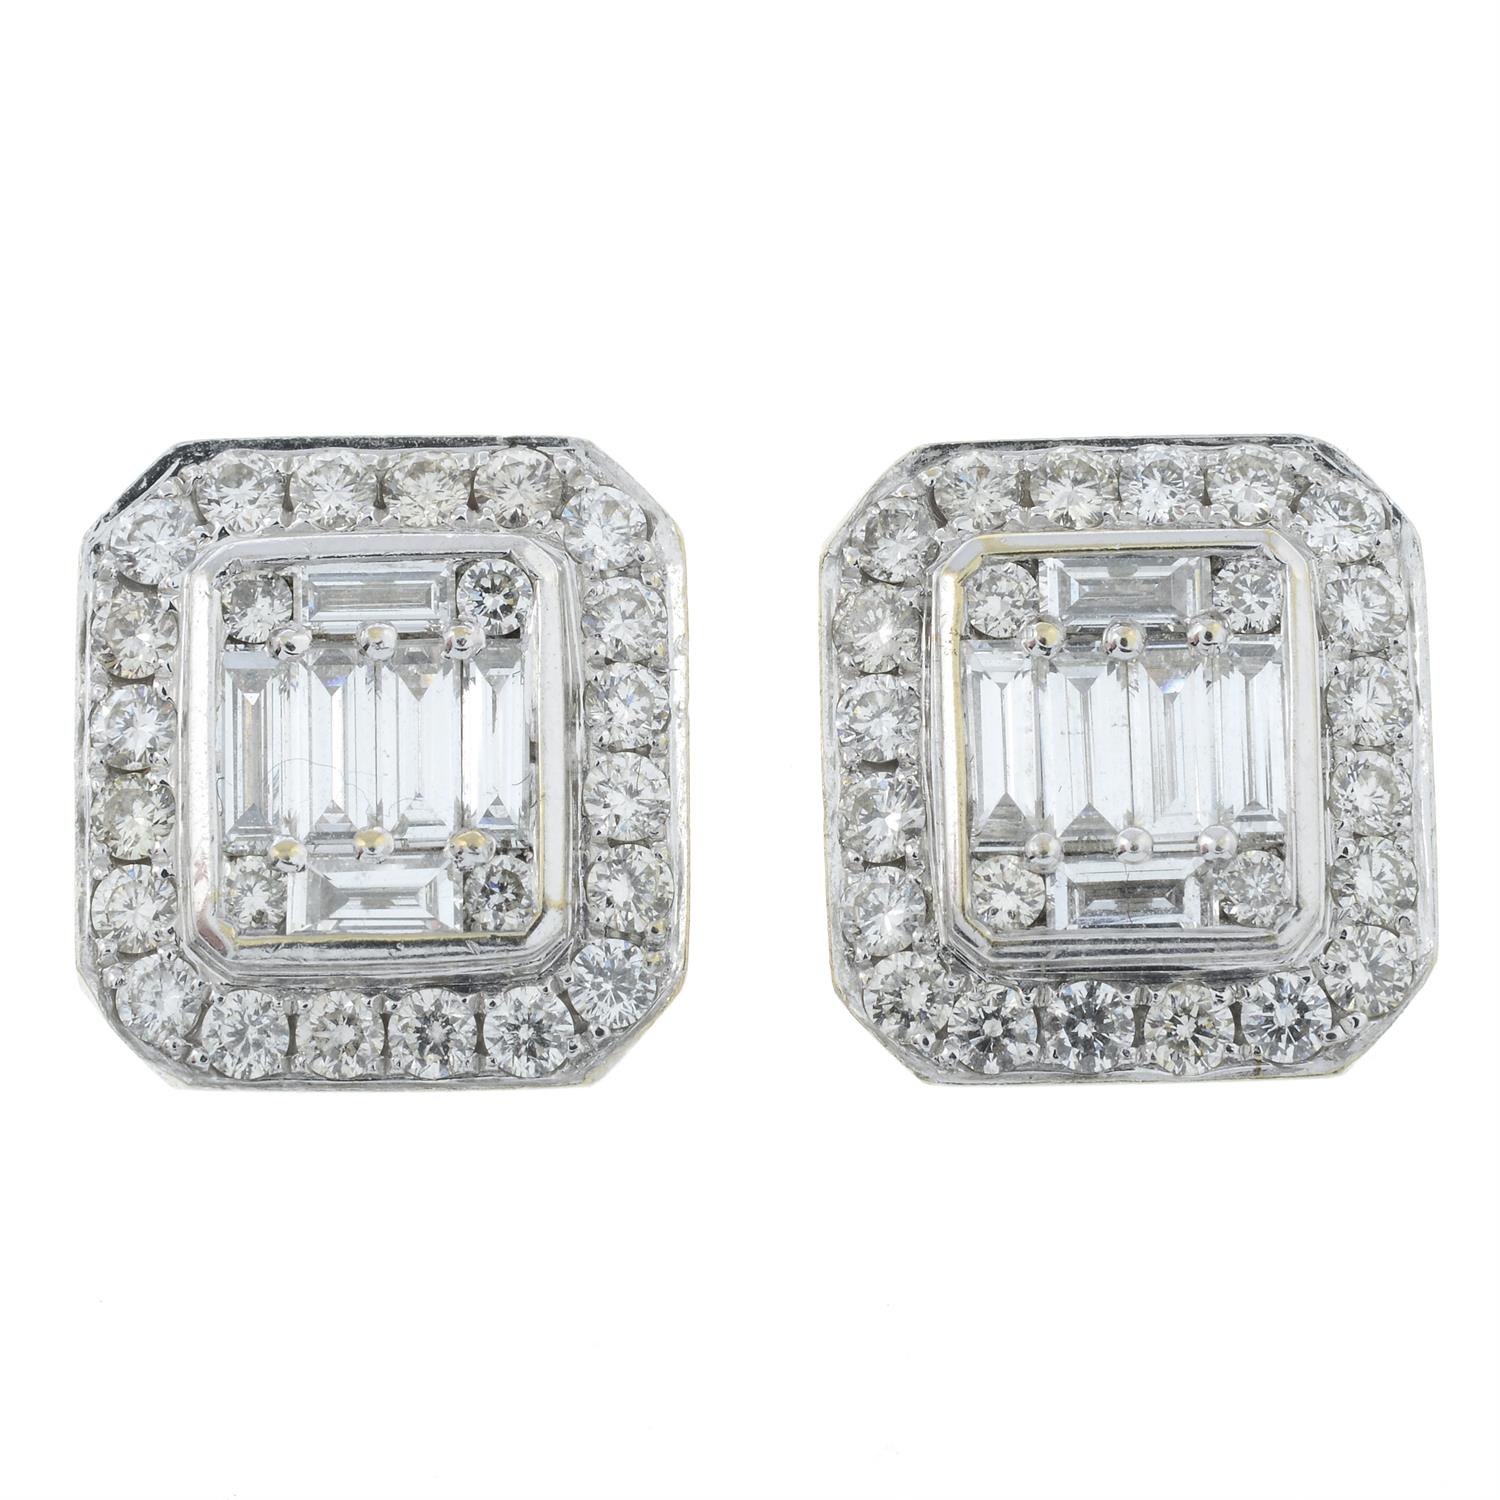 A pair of 18ct gold vari-cut diamond cluster earrings.